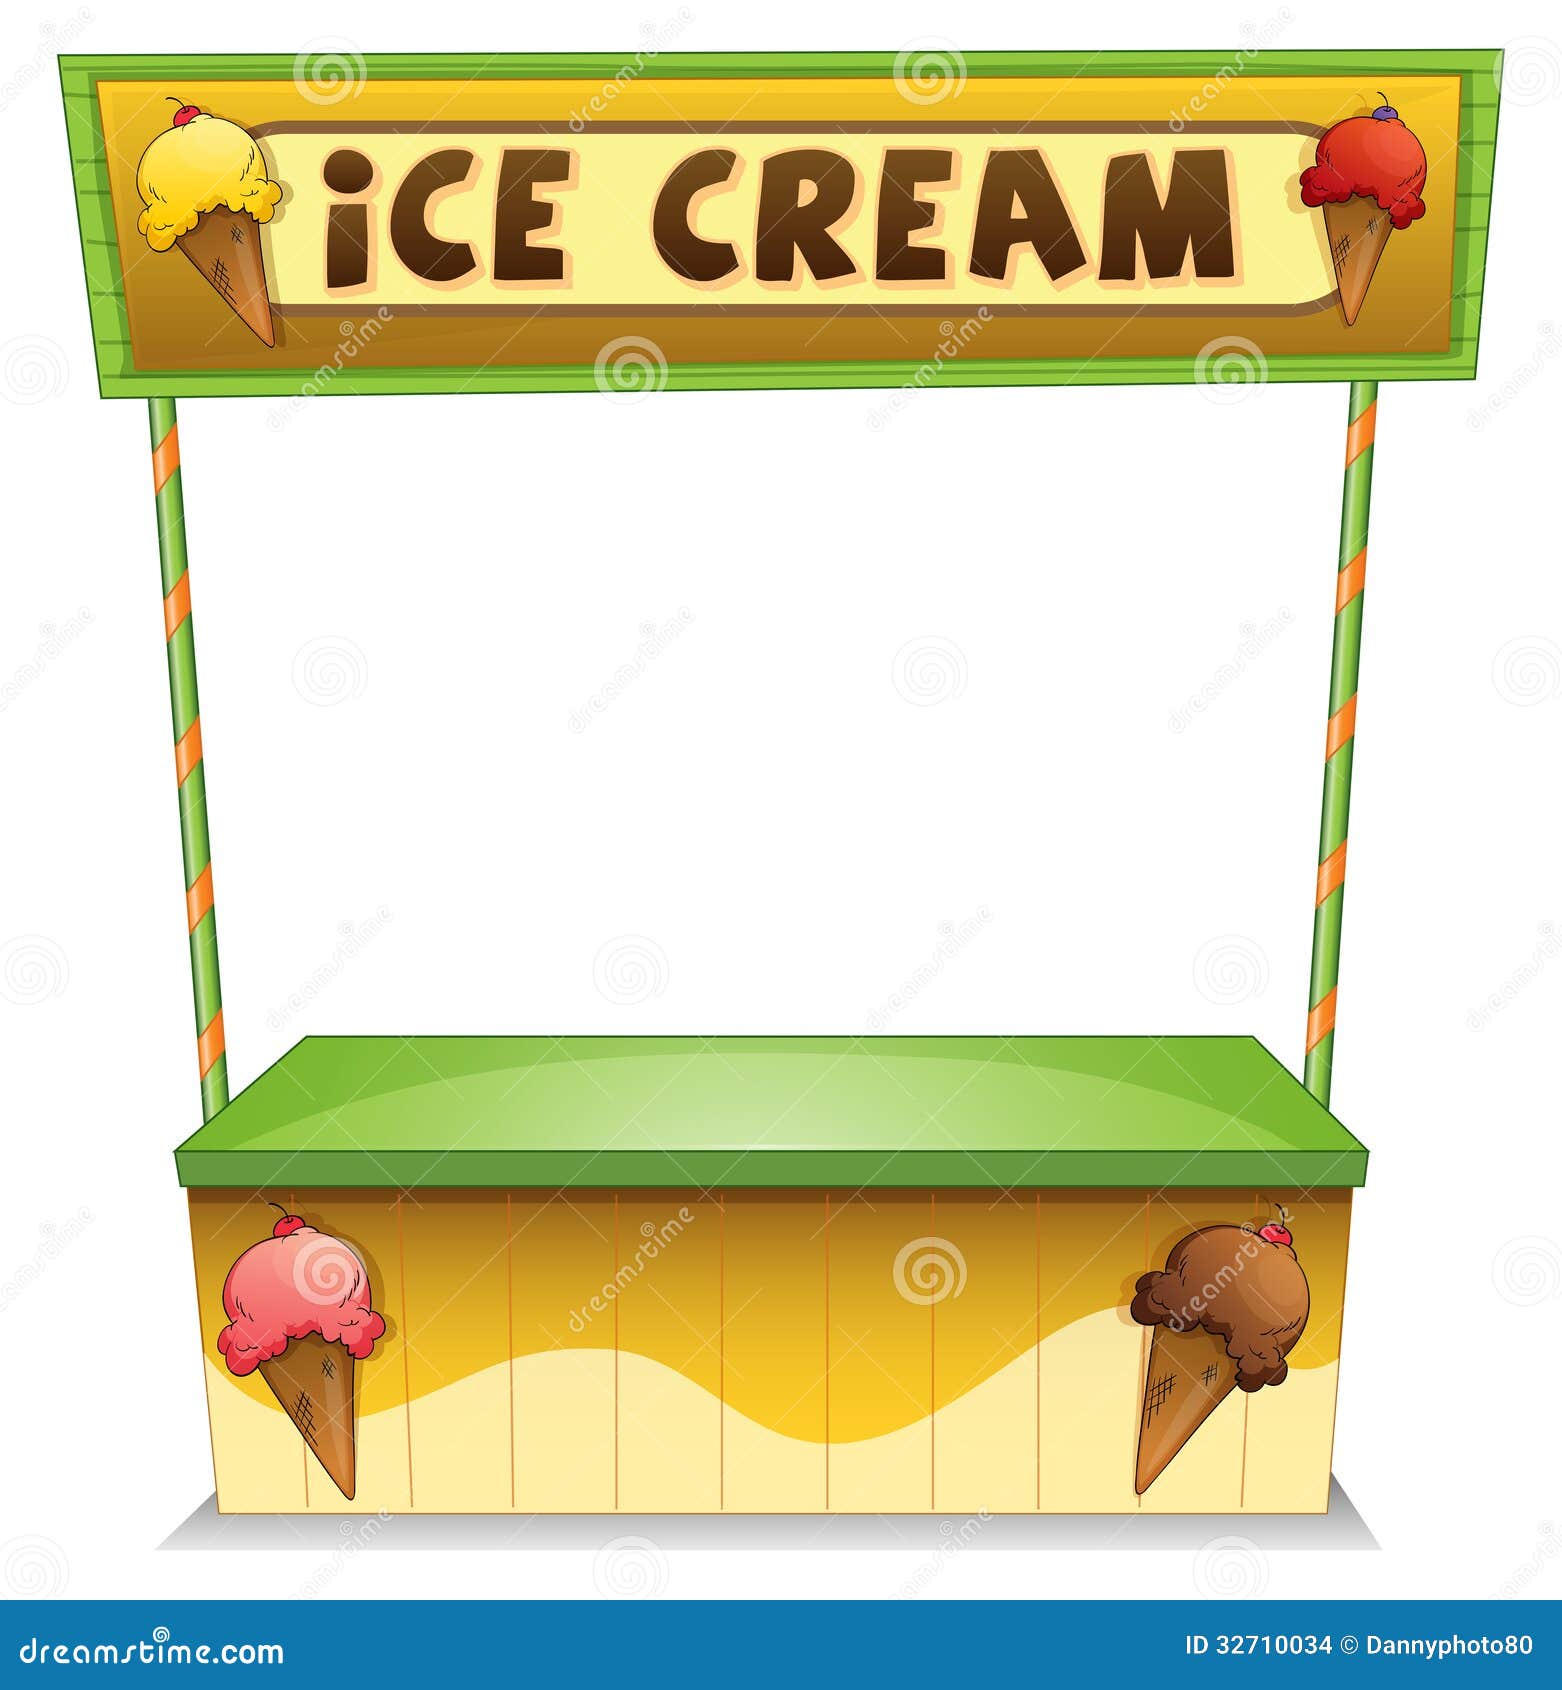 ice cream stand clipart - photo #6